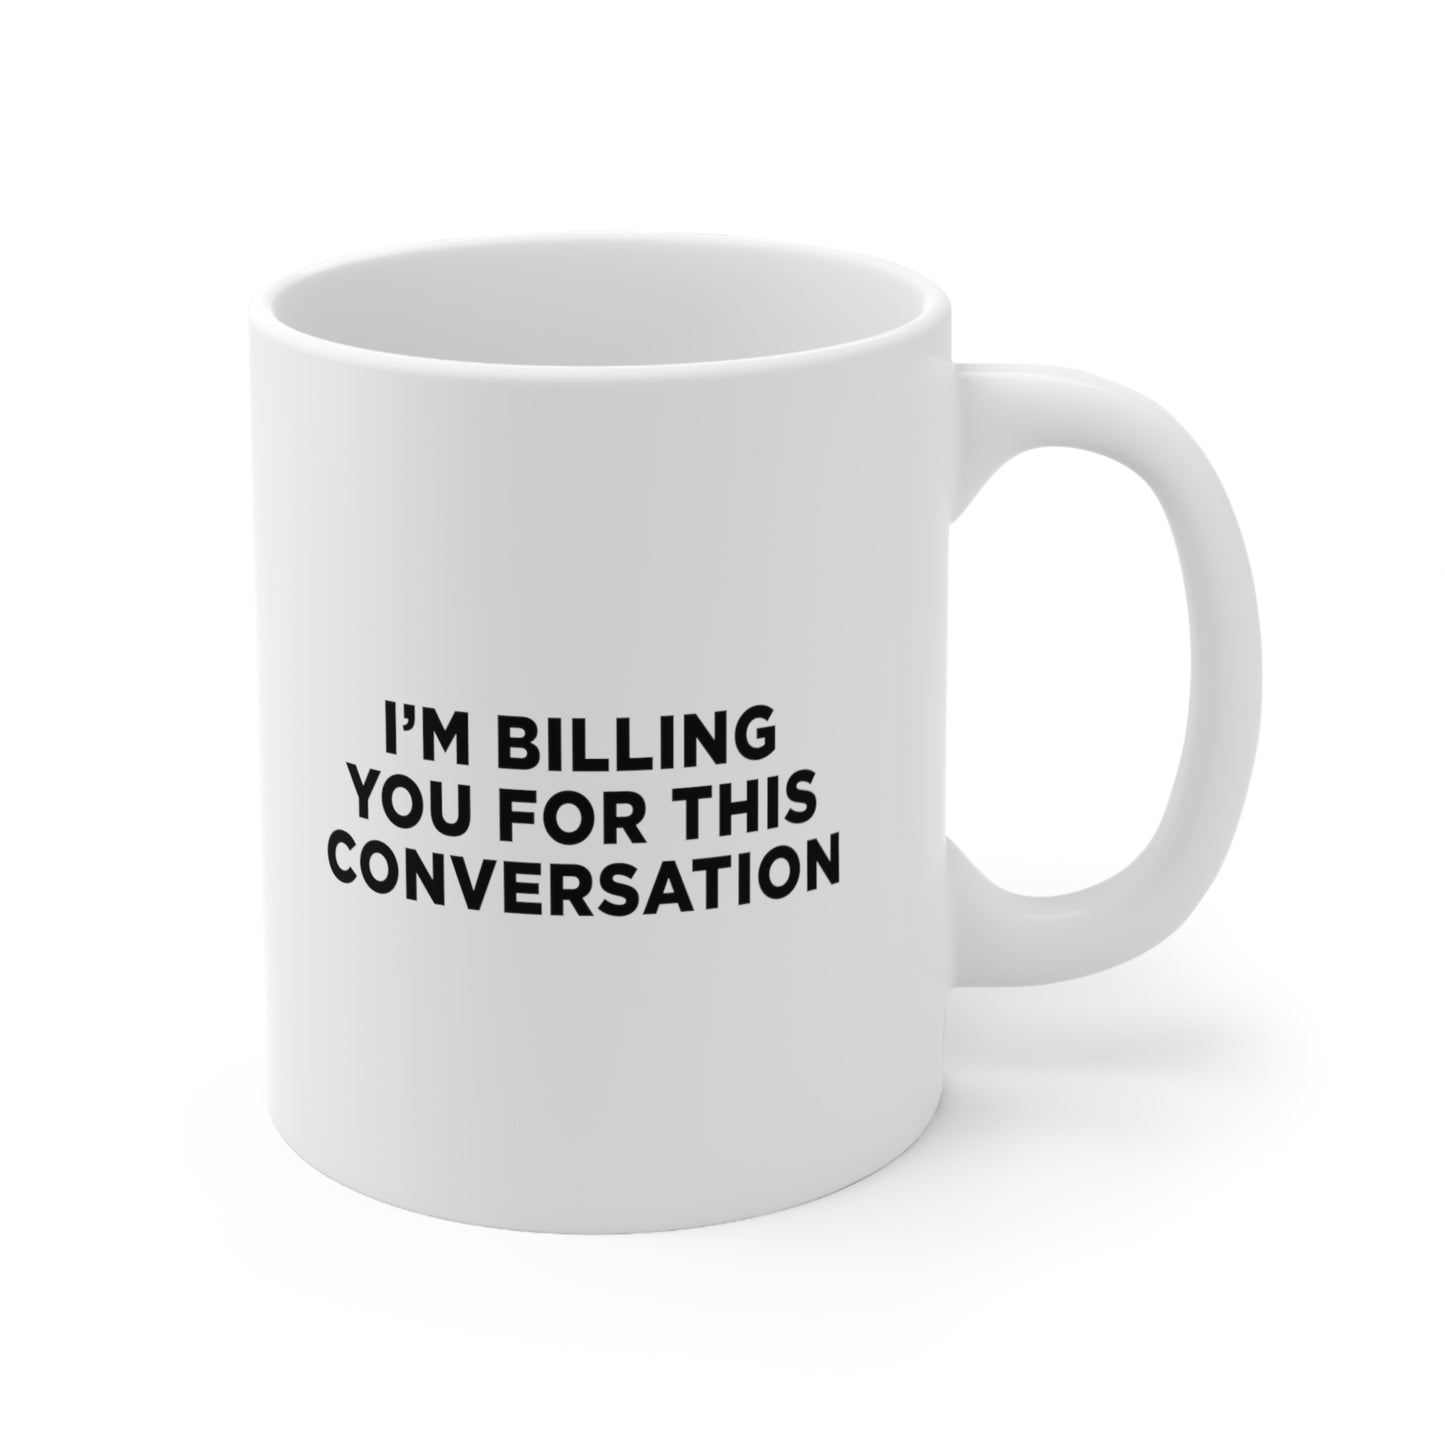 I'm Billing You for This Conversation Coffee Mug 11oz